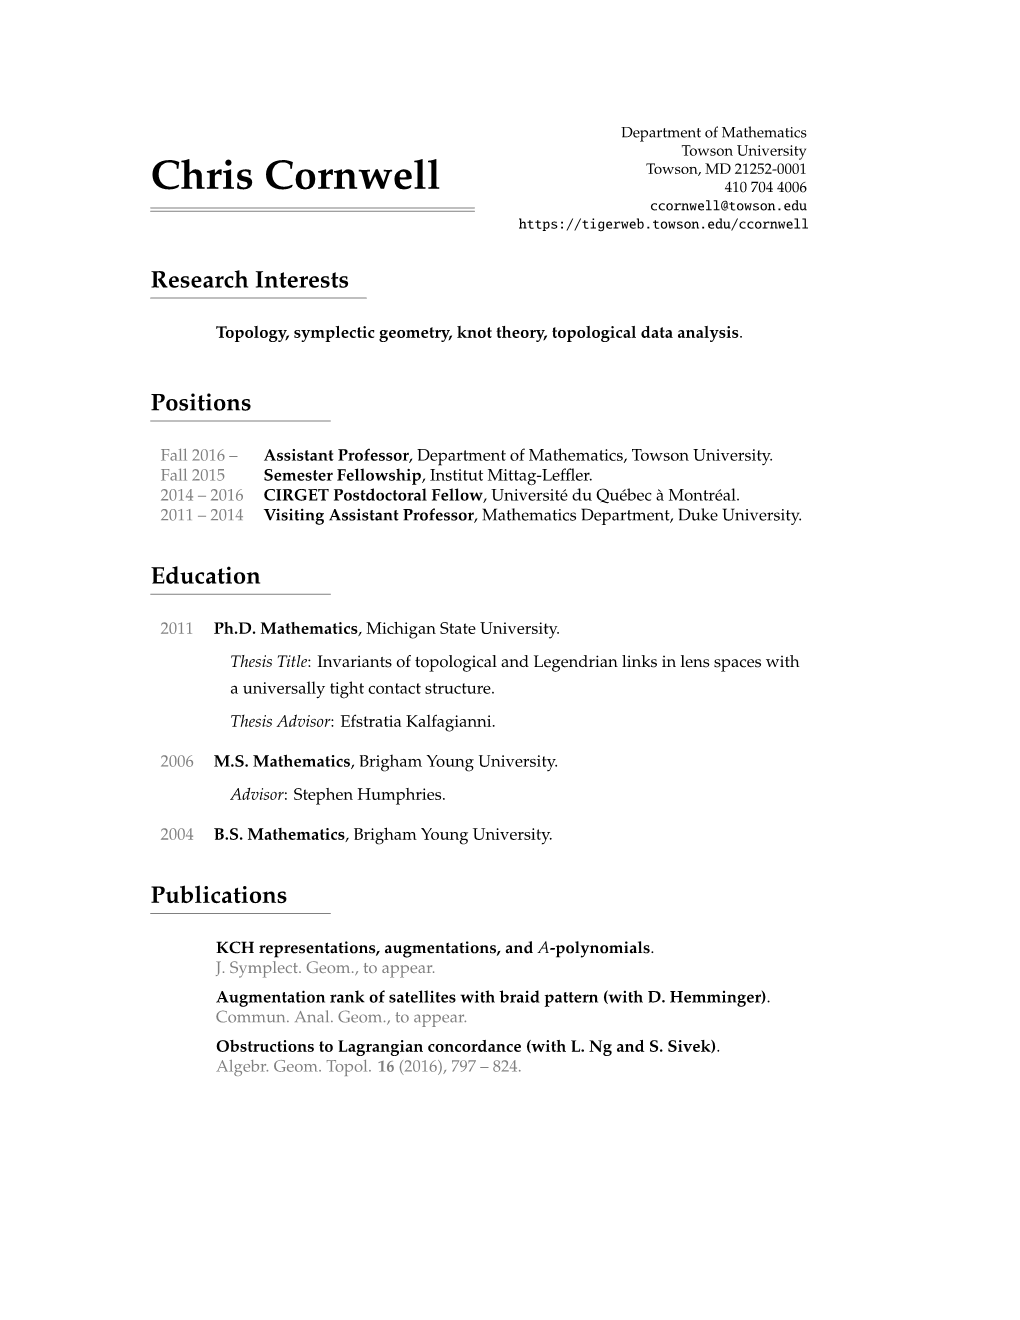 Chris Cornwell: Curriculum Vitae